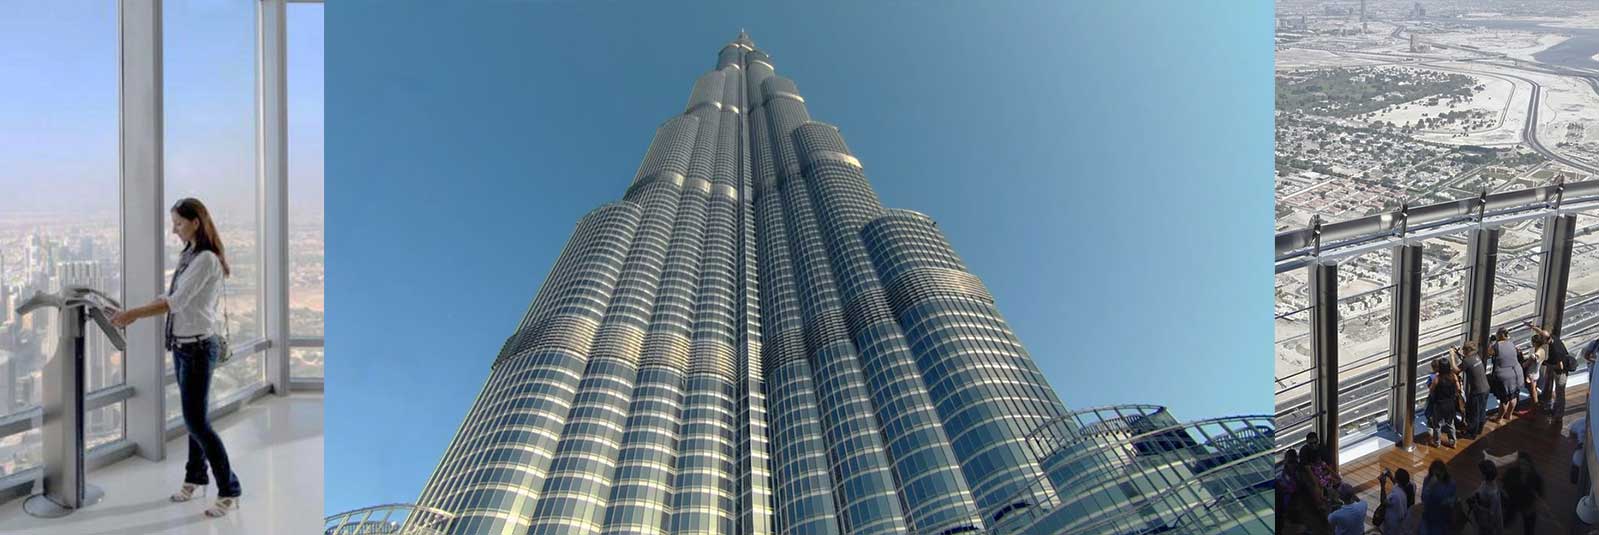 Burj-Khalifa-Ticket.jpg